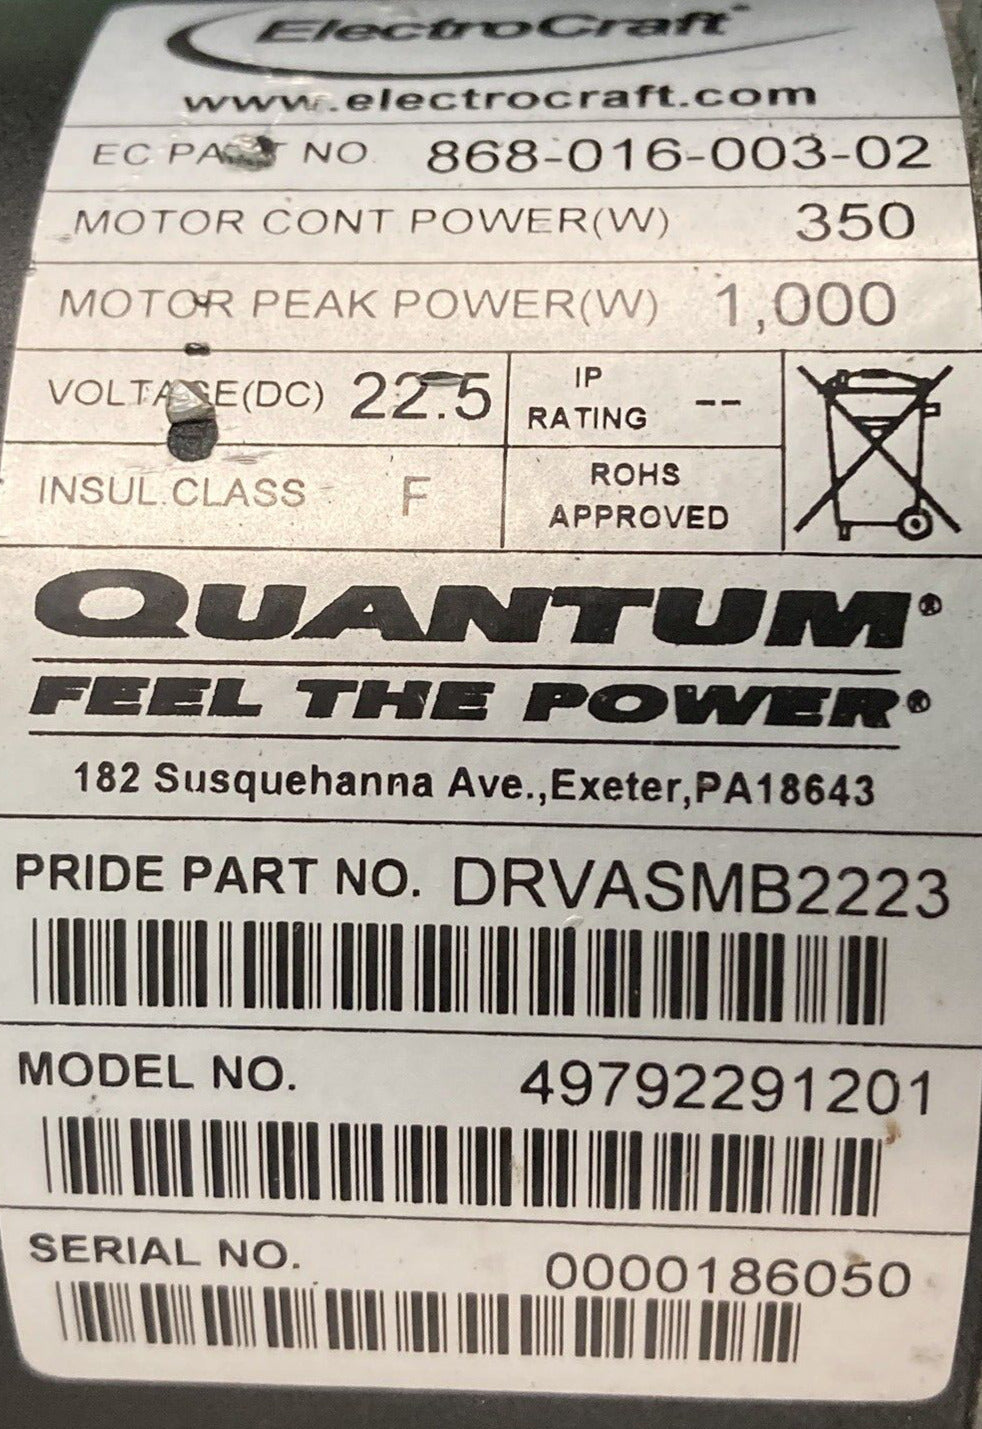 Right & Left Motors for Quantum Q6 Edge Powerchair -DRVASMB2223-DRVASMB224 #J454